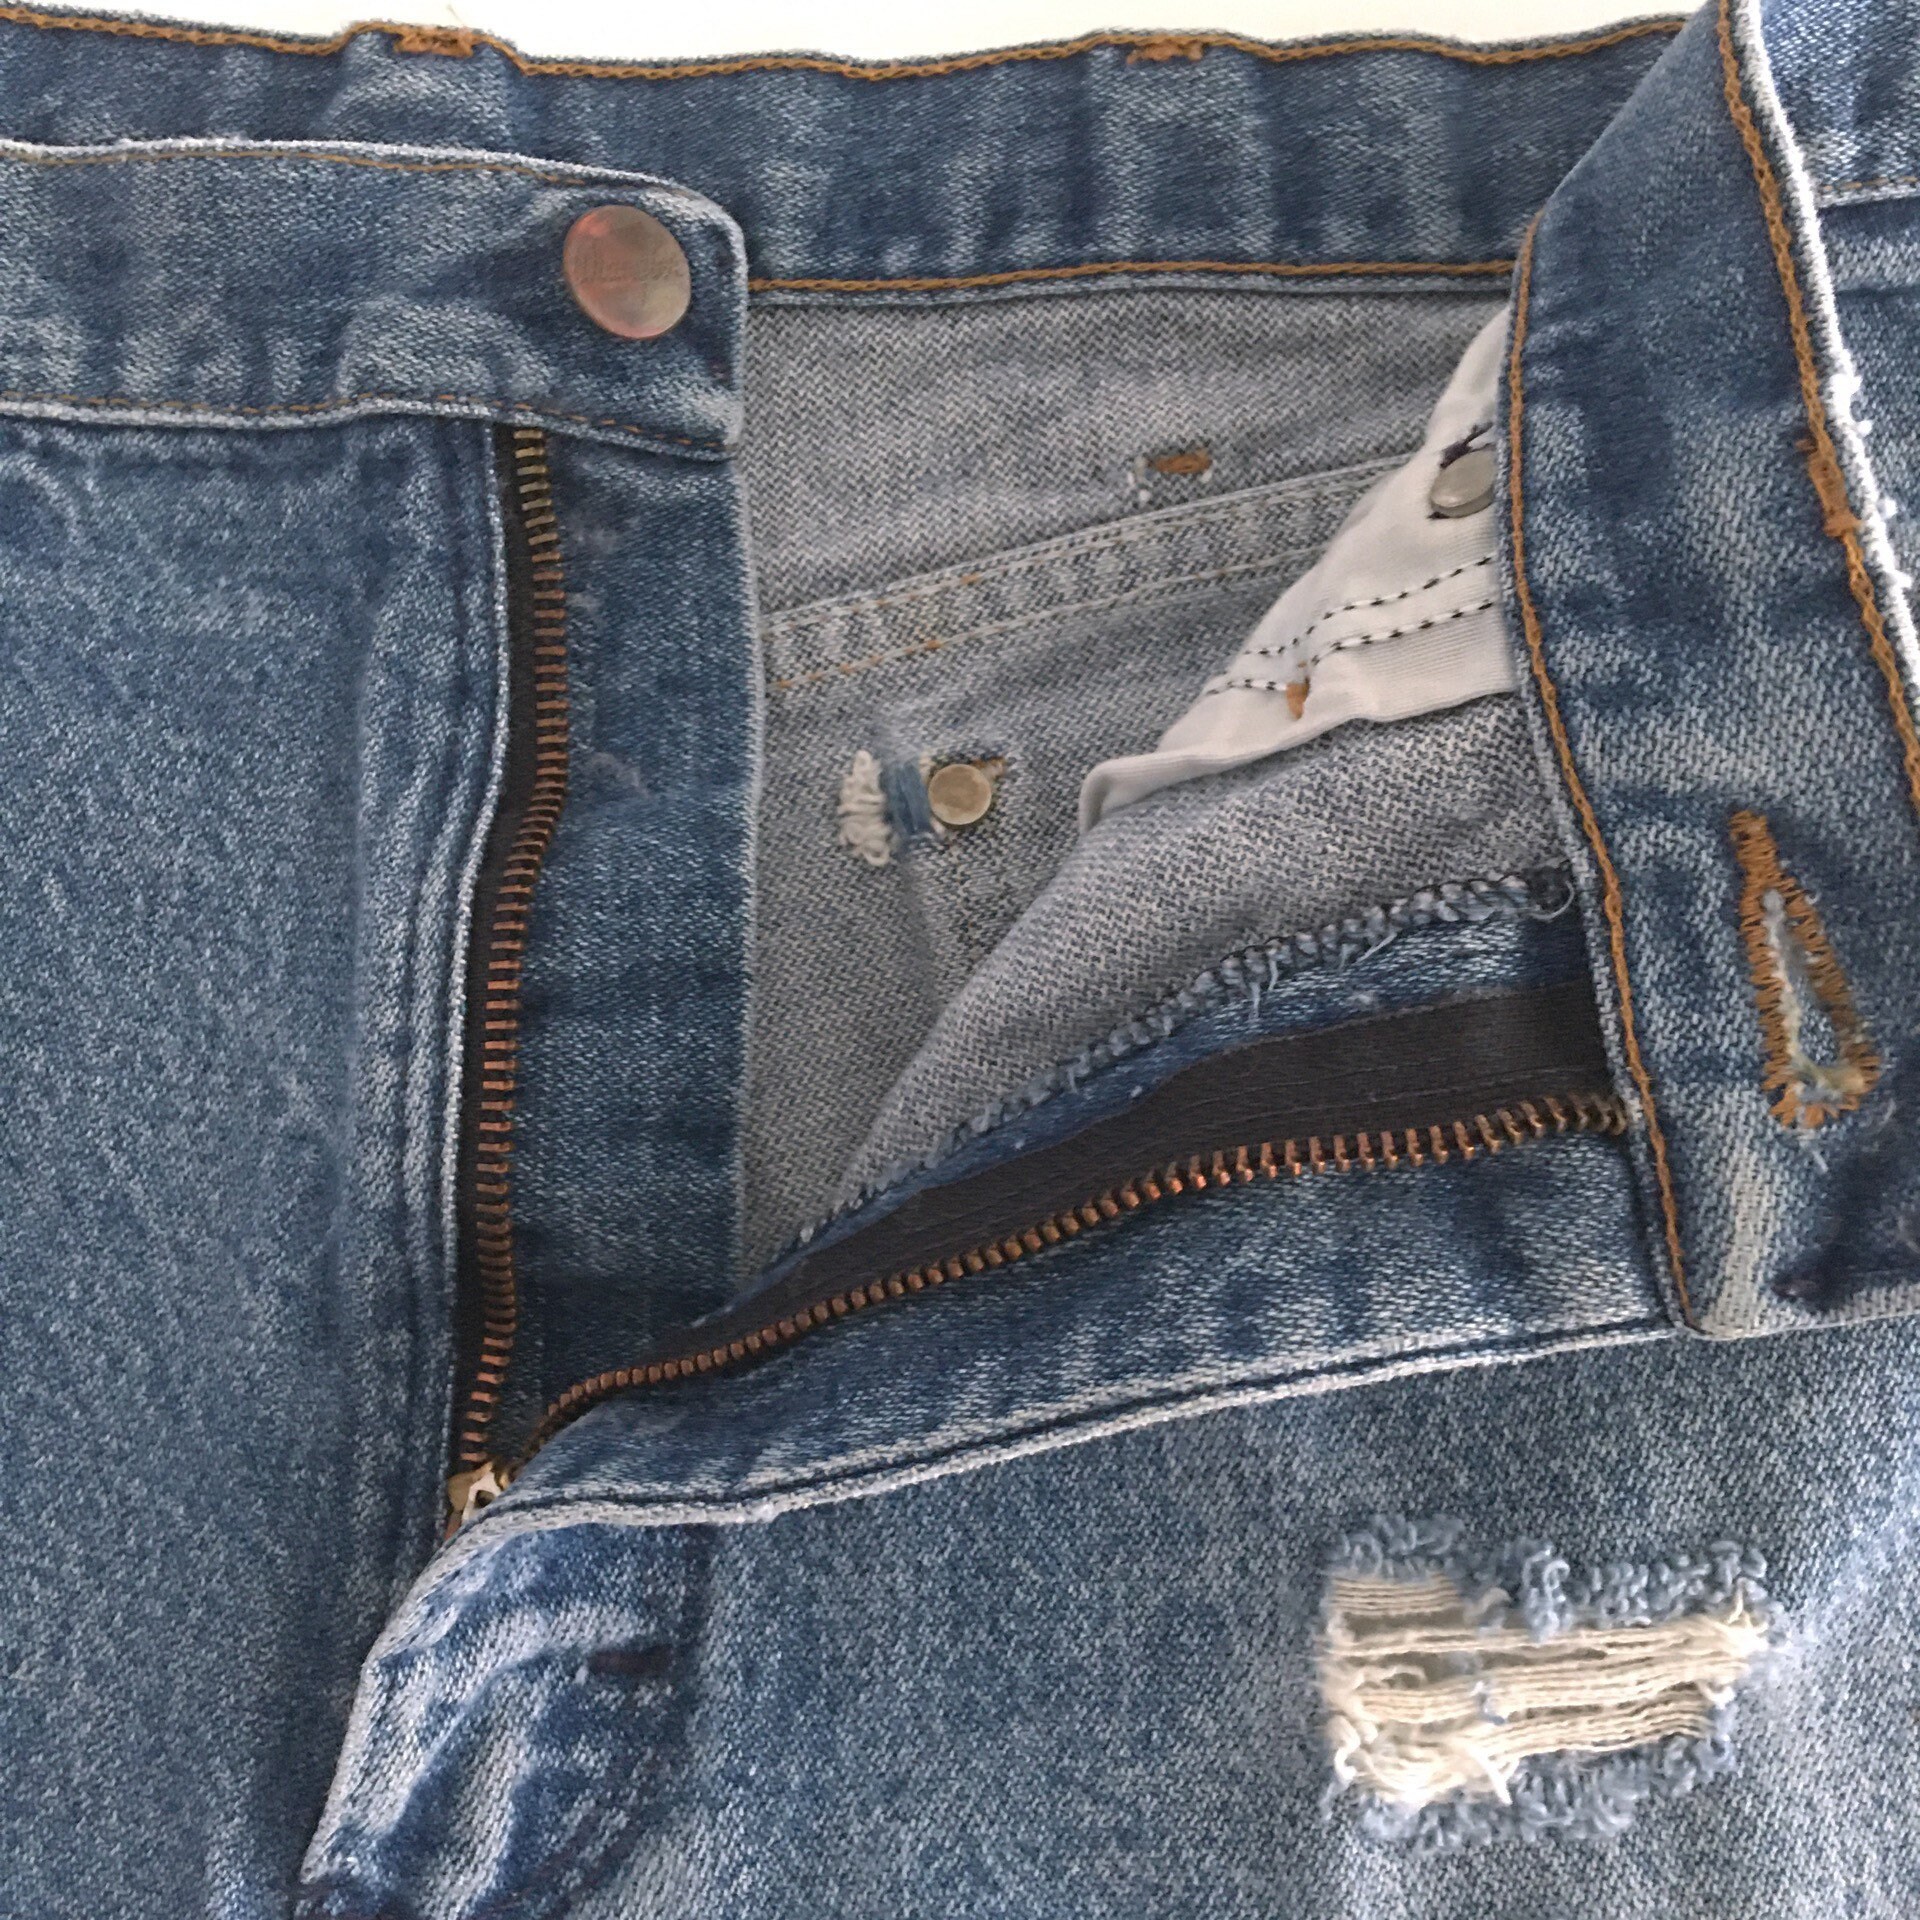 Wrangler Vintage Denim Shorts 32 Cut off Distressed Denim - Etsy